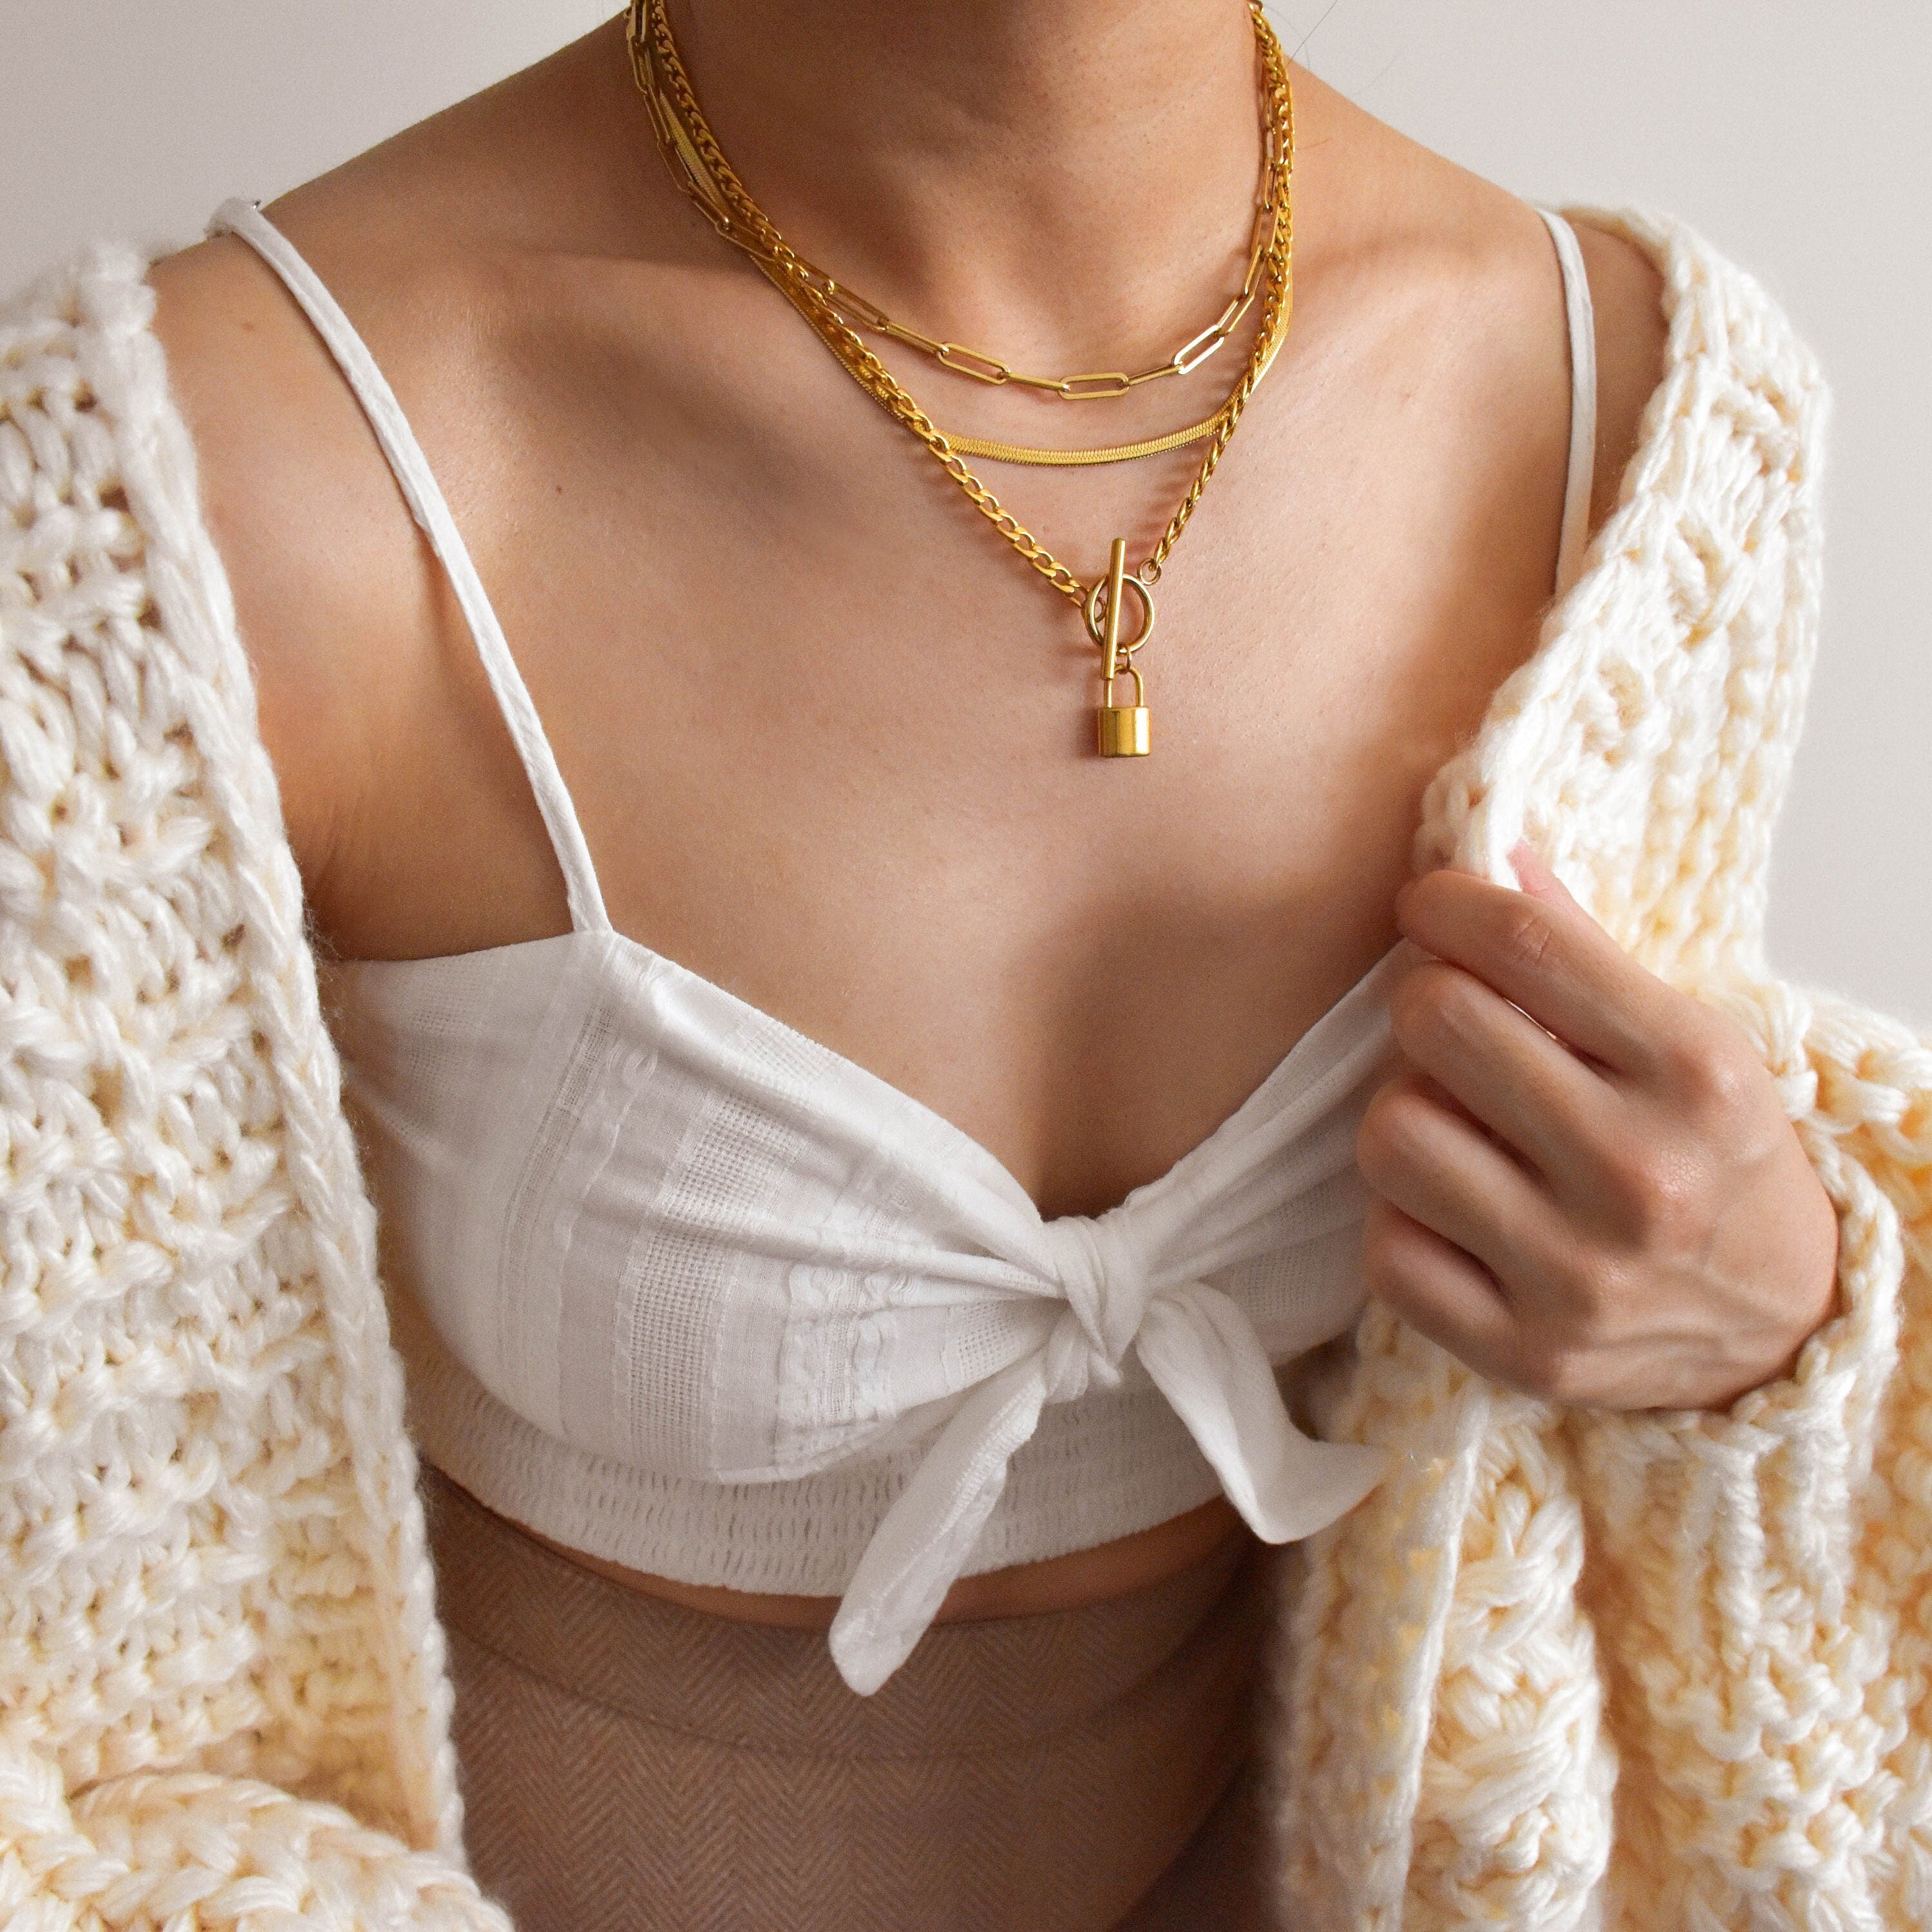 Toggle Lock Necklace - padlock necklace, lock pendant necklace, gold lock necklace, chunky lock necklace, gold padlock necklace |GPN00041